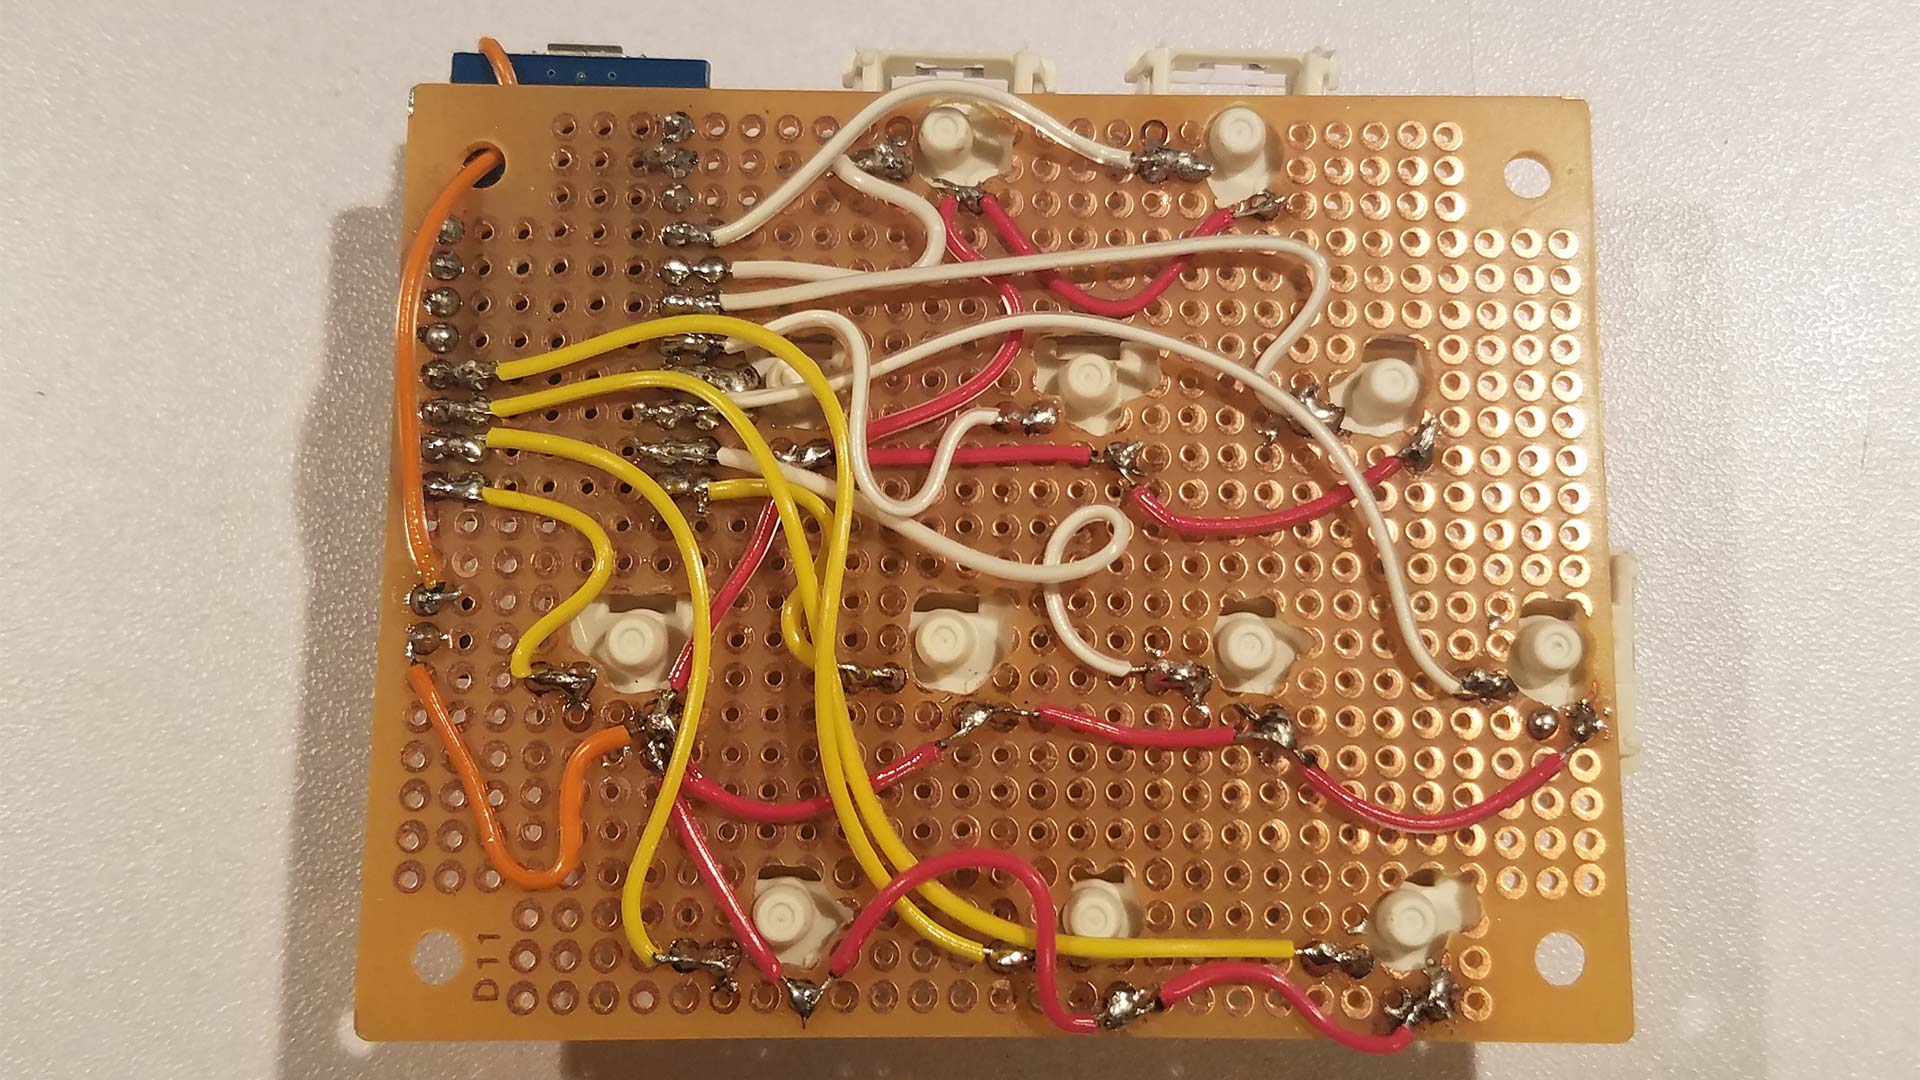 Digital Pin Wiring of Arduino StreamDeck